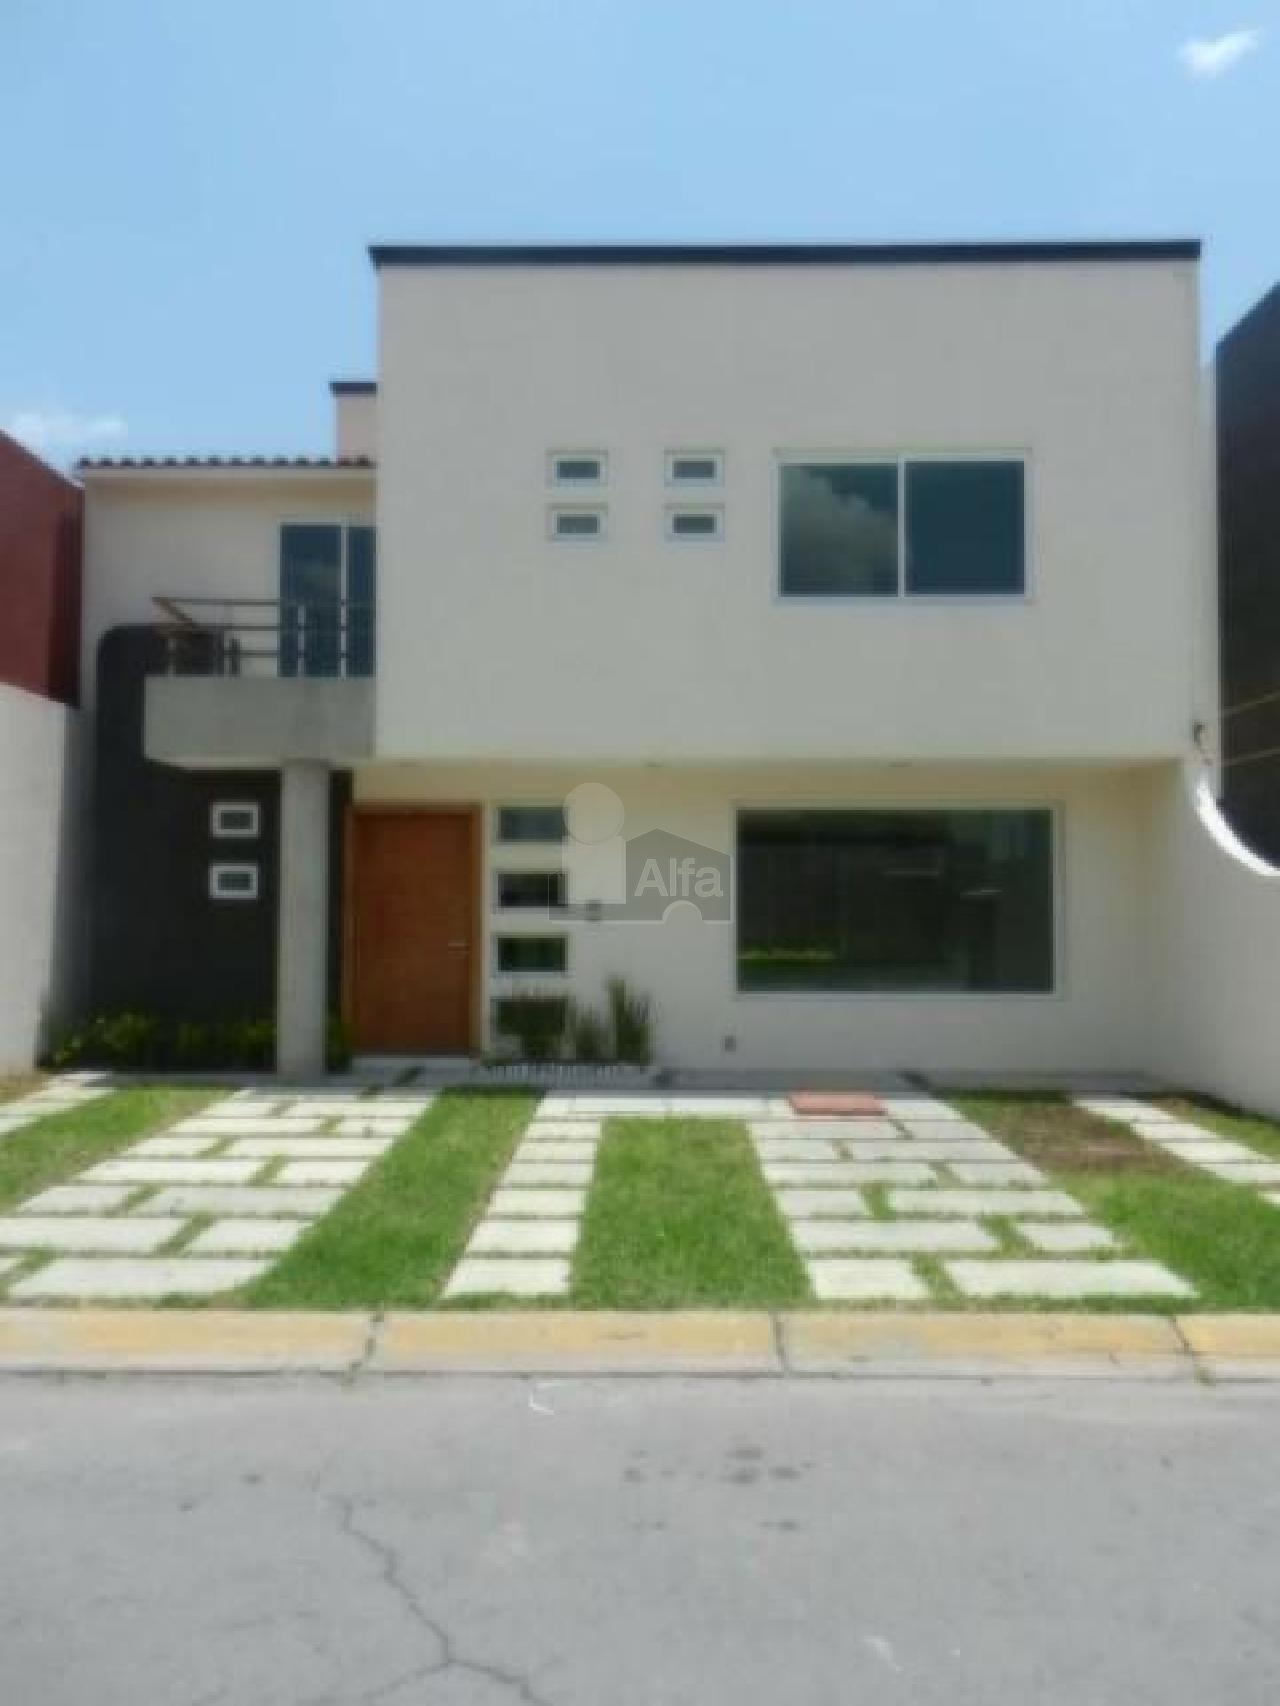 Foto Casa en Venta en San Mateo Otzacatipan, Toluca, Mxico - $ 3.150.000 - 1424-1682 - BienesOnLine